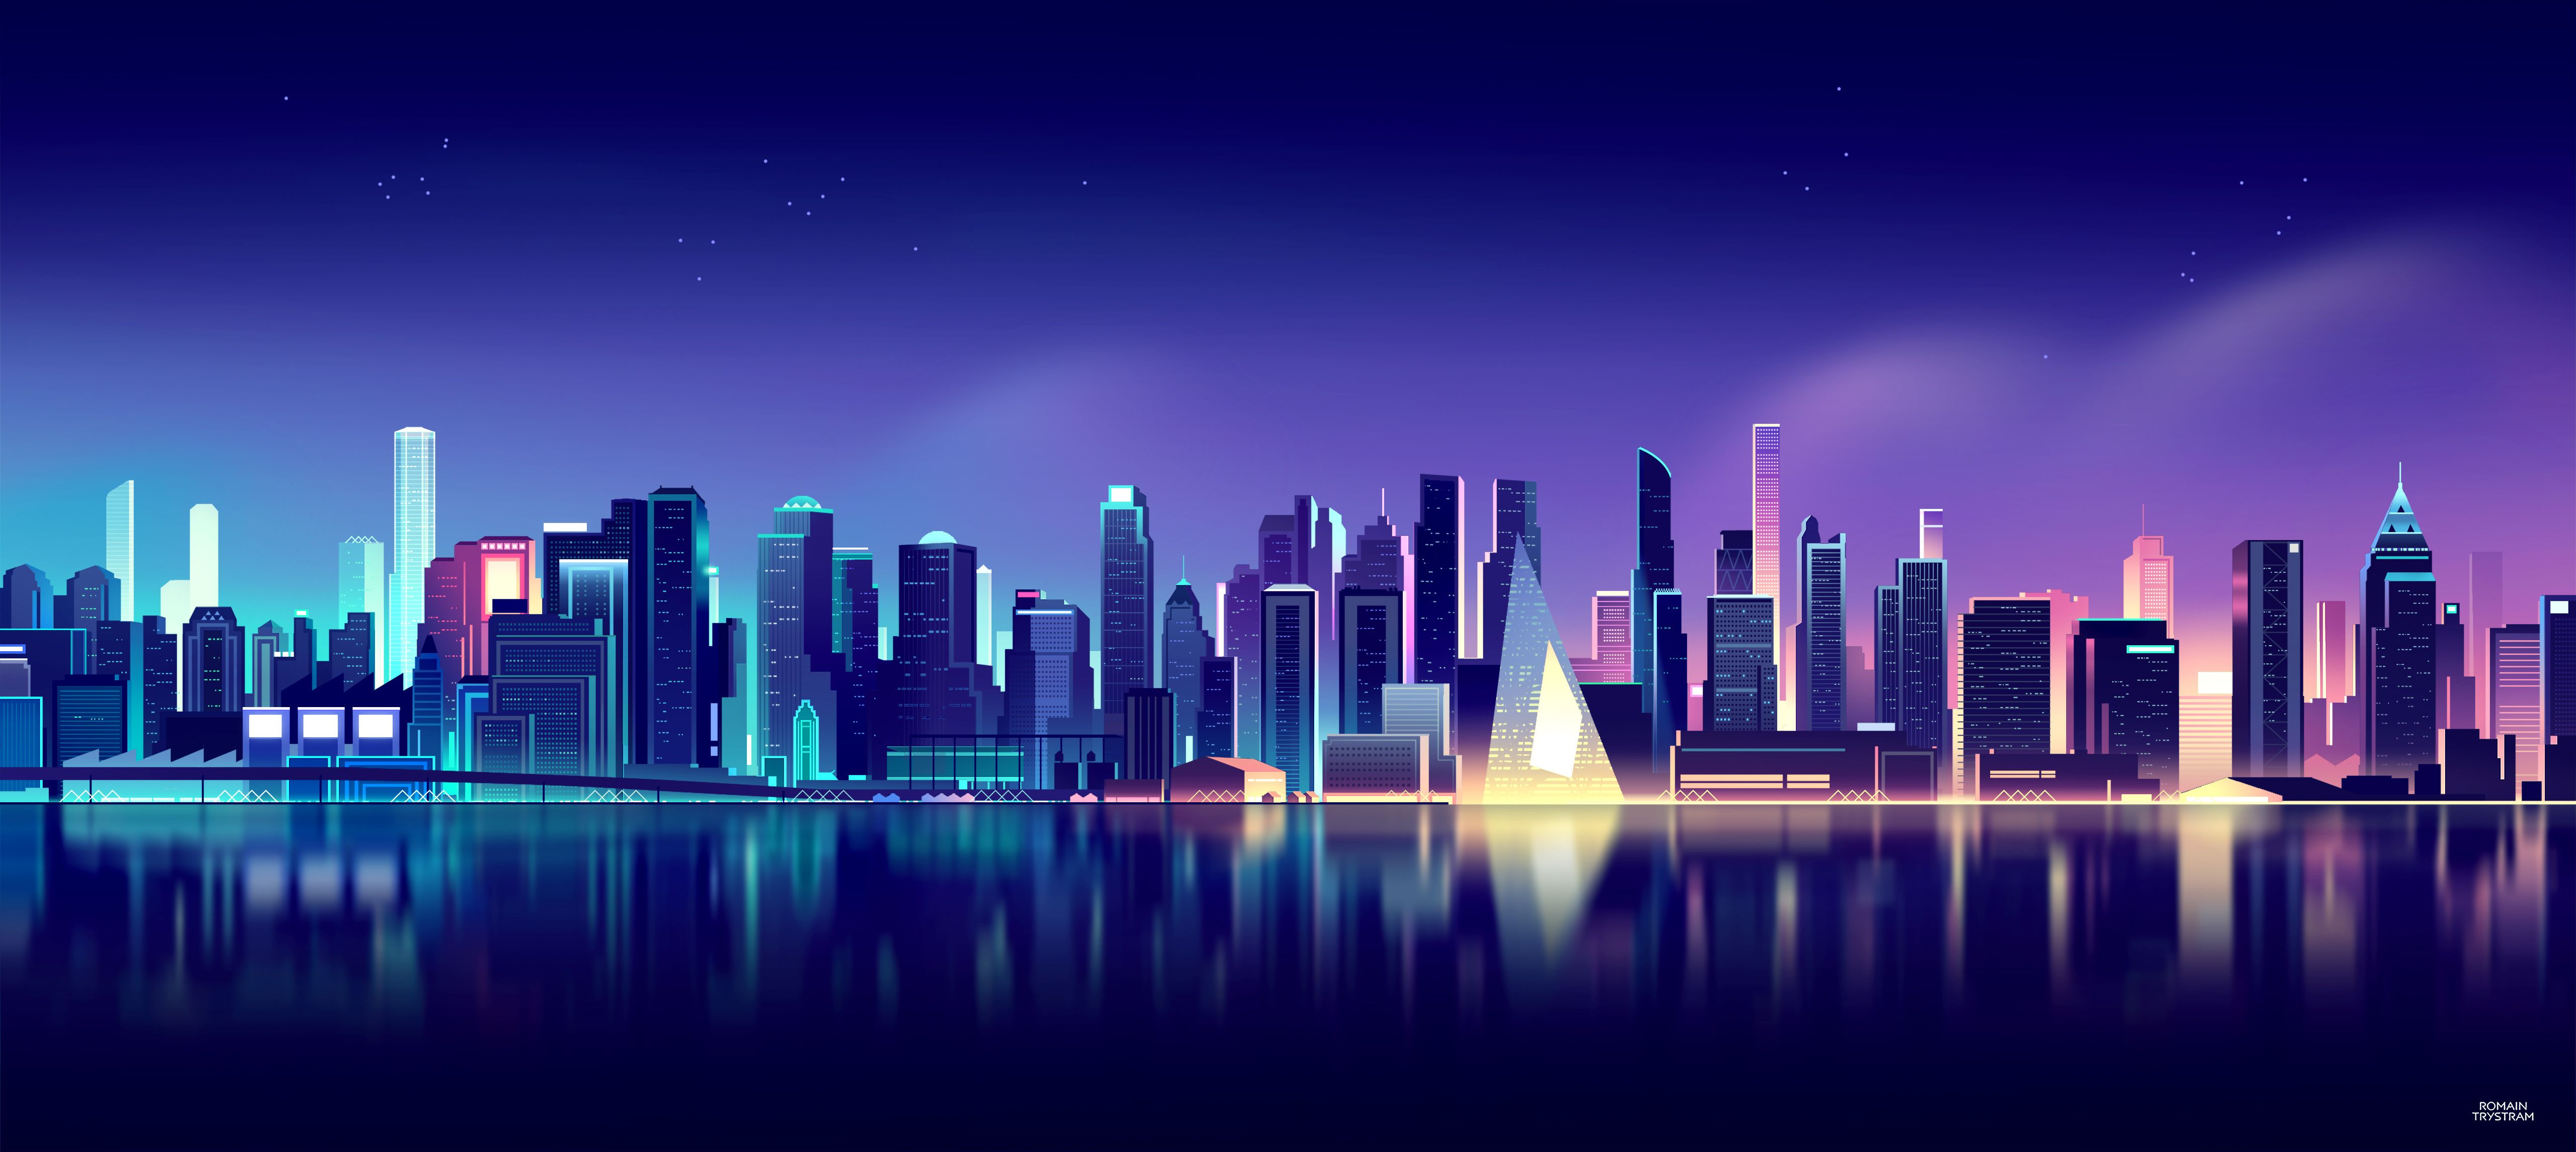 Cityscape 4K Wallpaper, Neon, Reflections, 5K, World